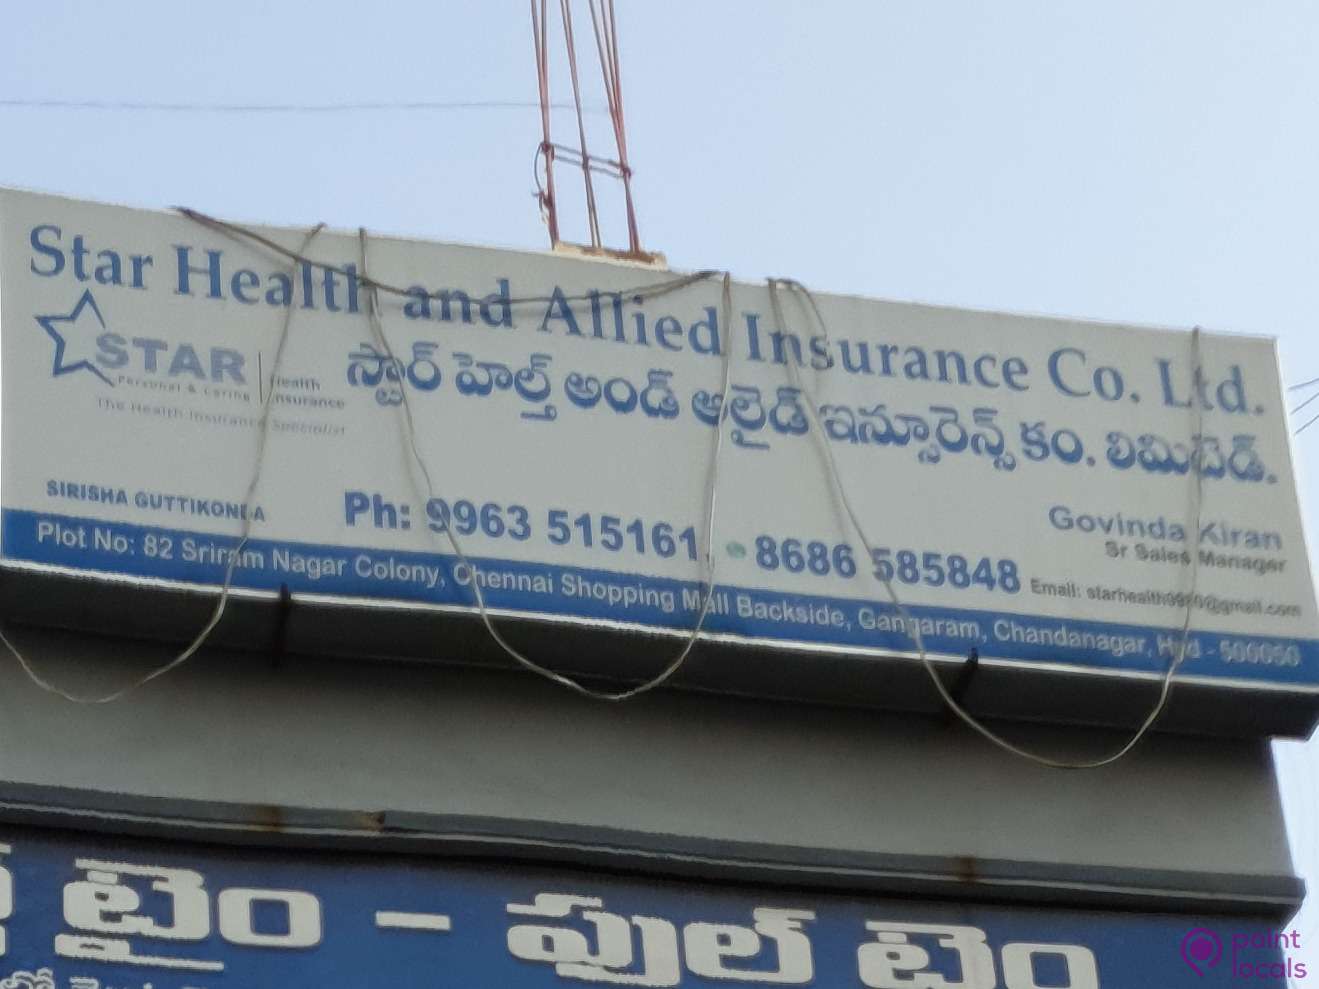 Devarajan Star Health Insurance in Nanganallur,Chennai - Best Insurance  Agents in Chennai - Justdial